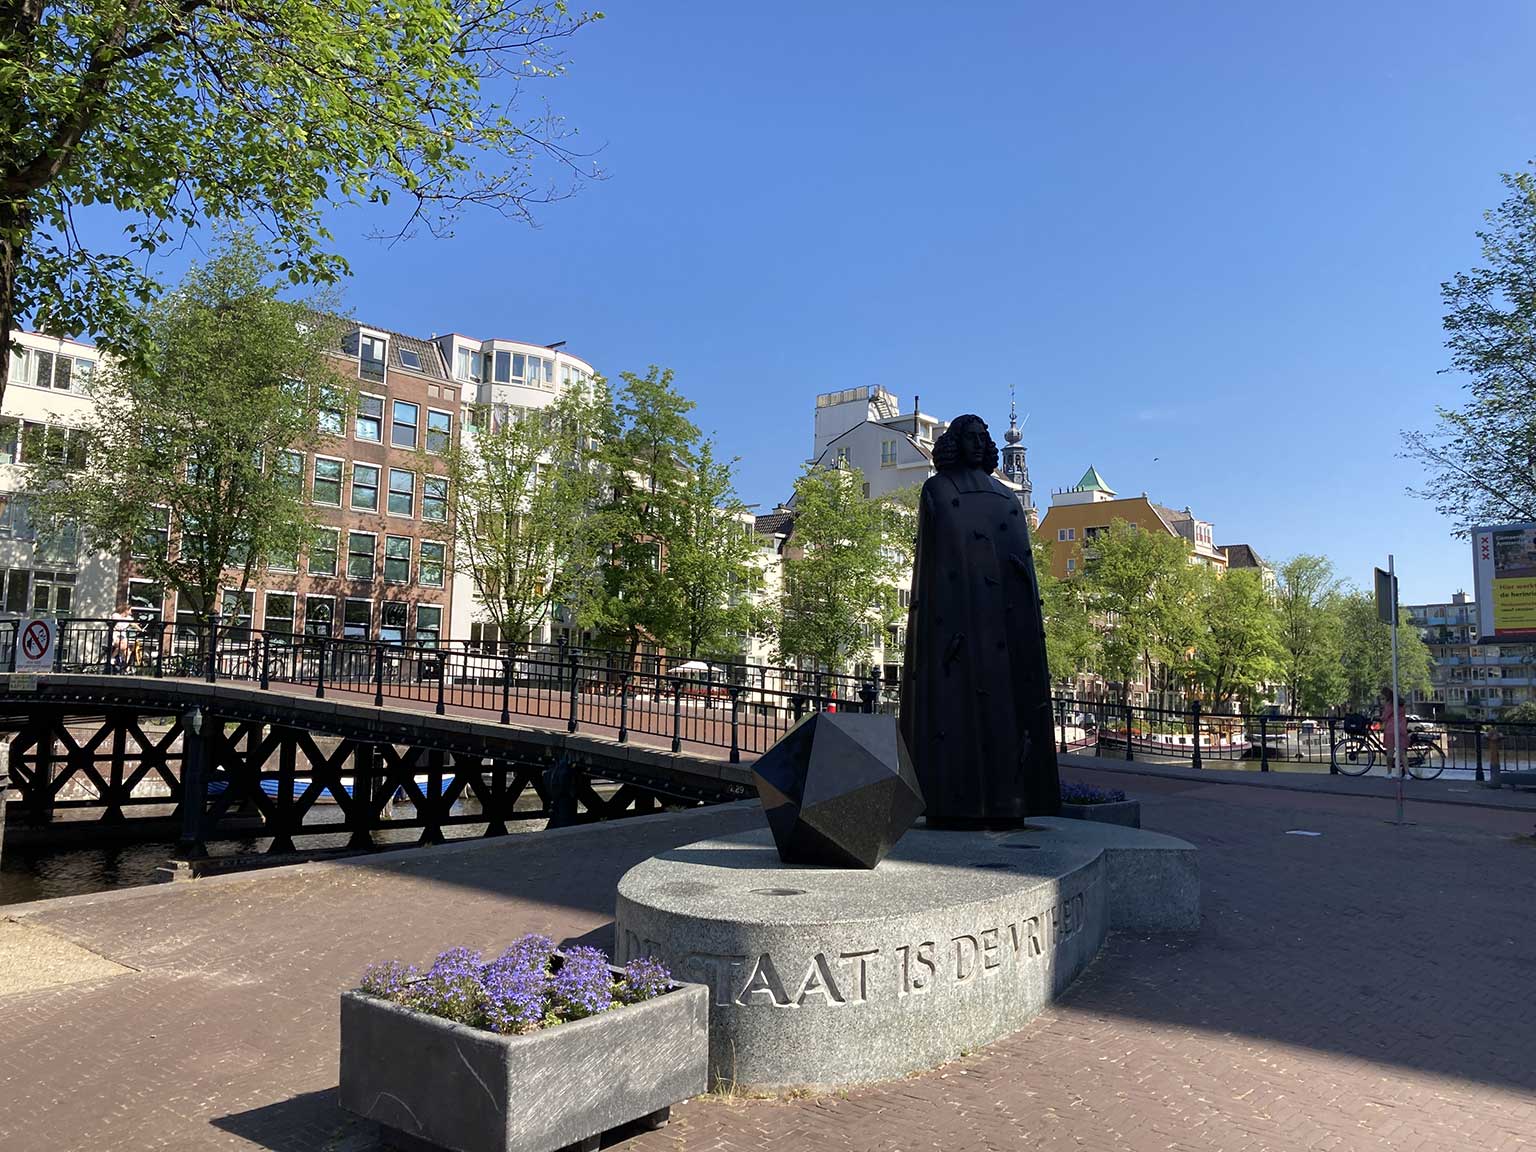 Statue of Spinoza at the Zwanenburgwal, Amsterdam, with inscription at the base